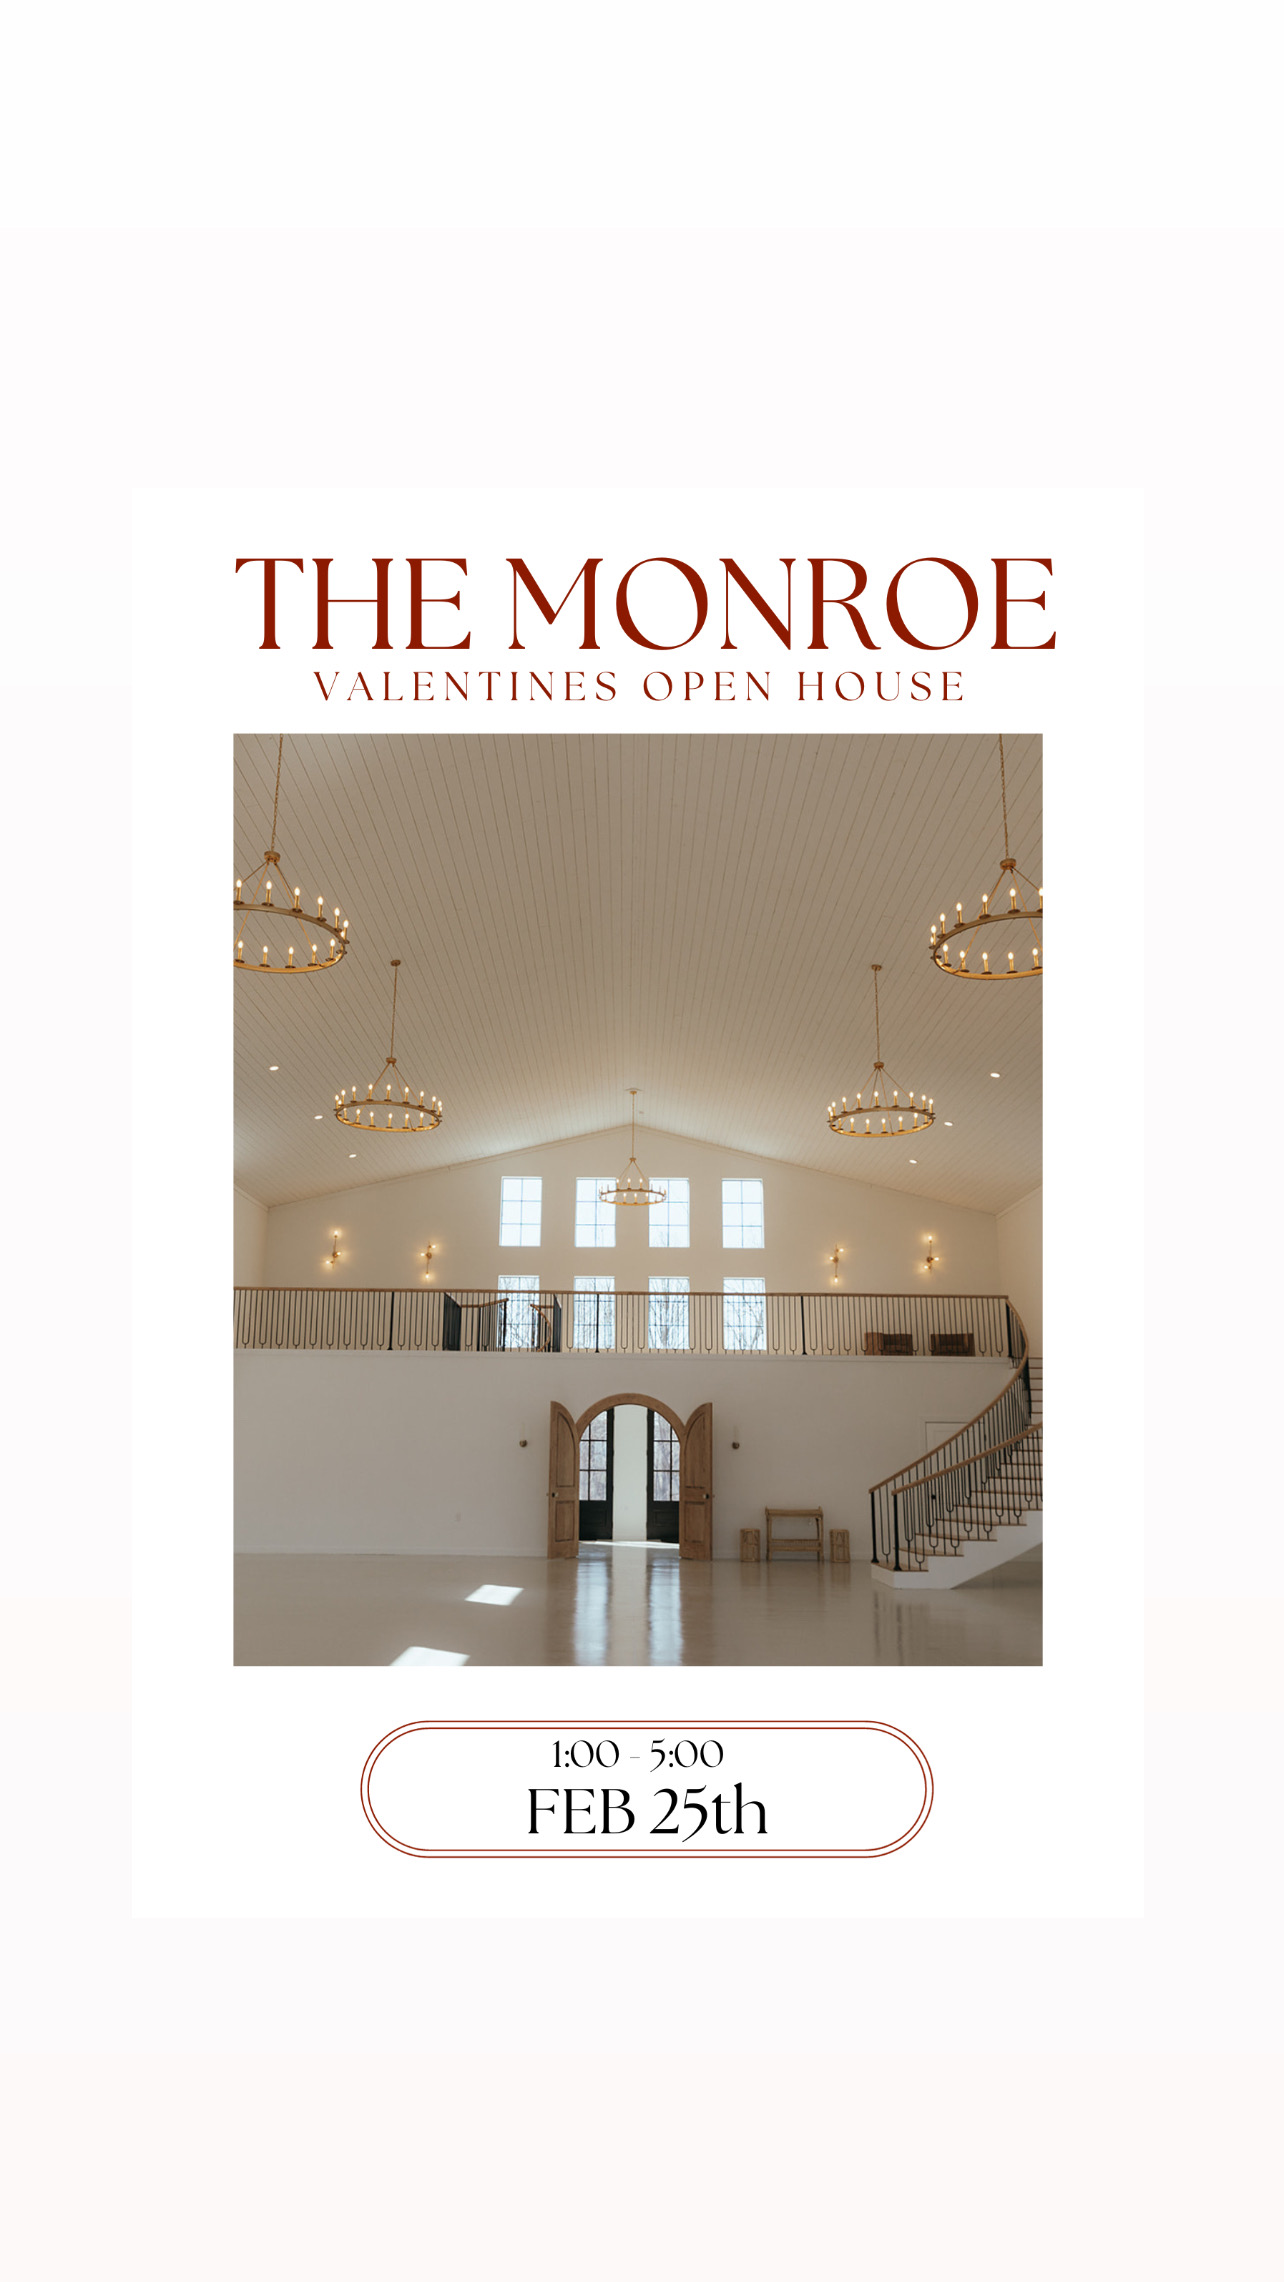 The Monroe Valentine’s Open House